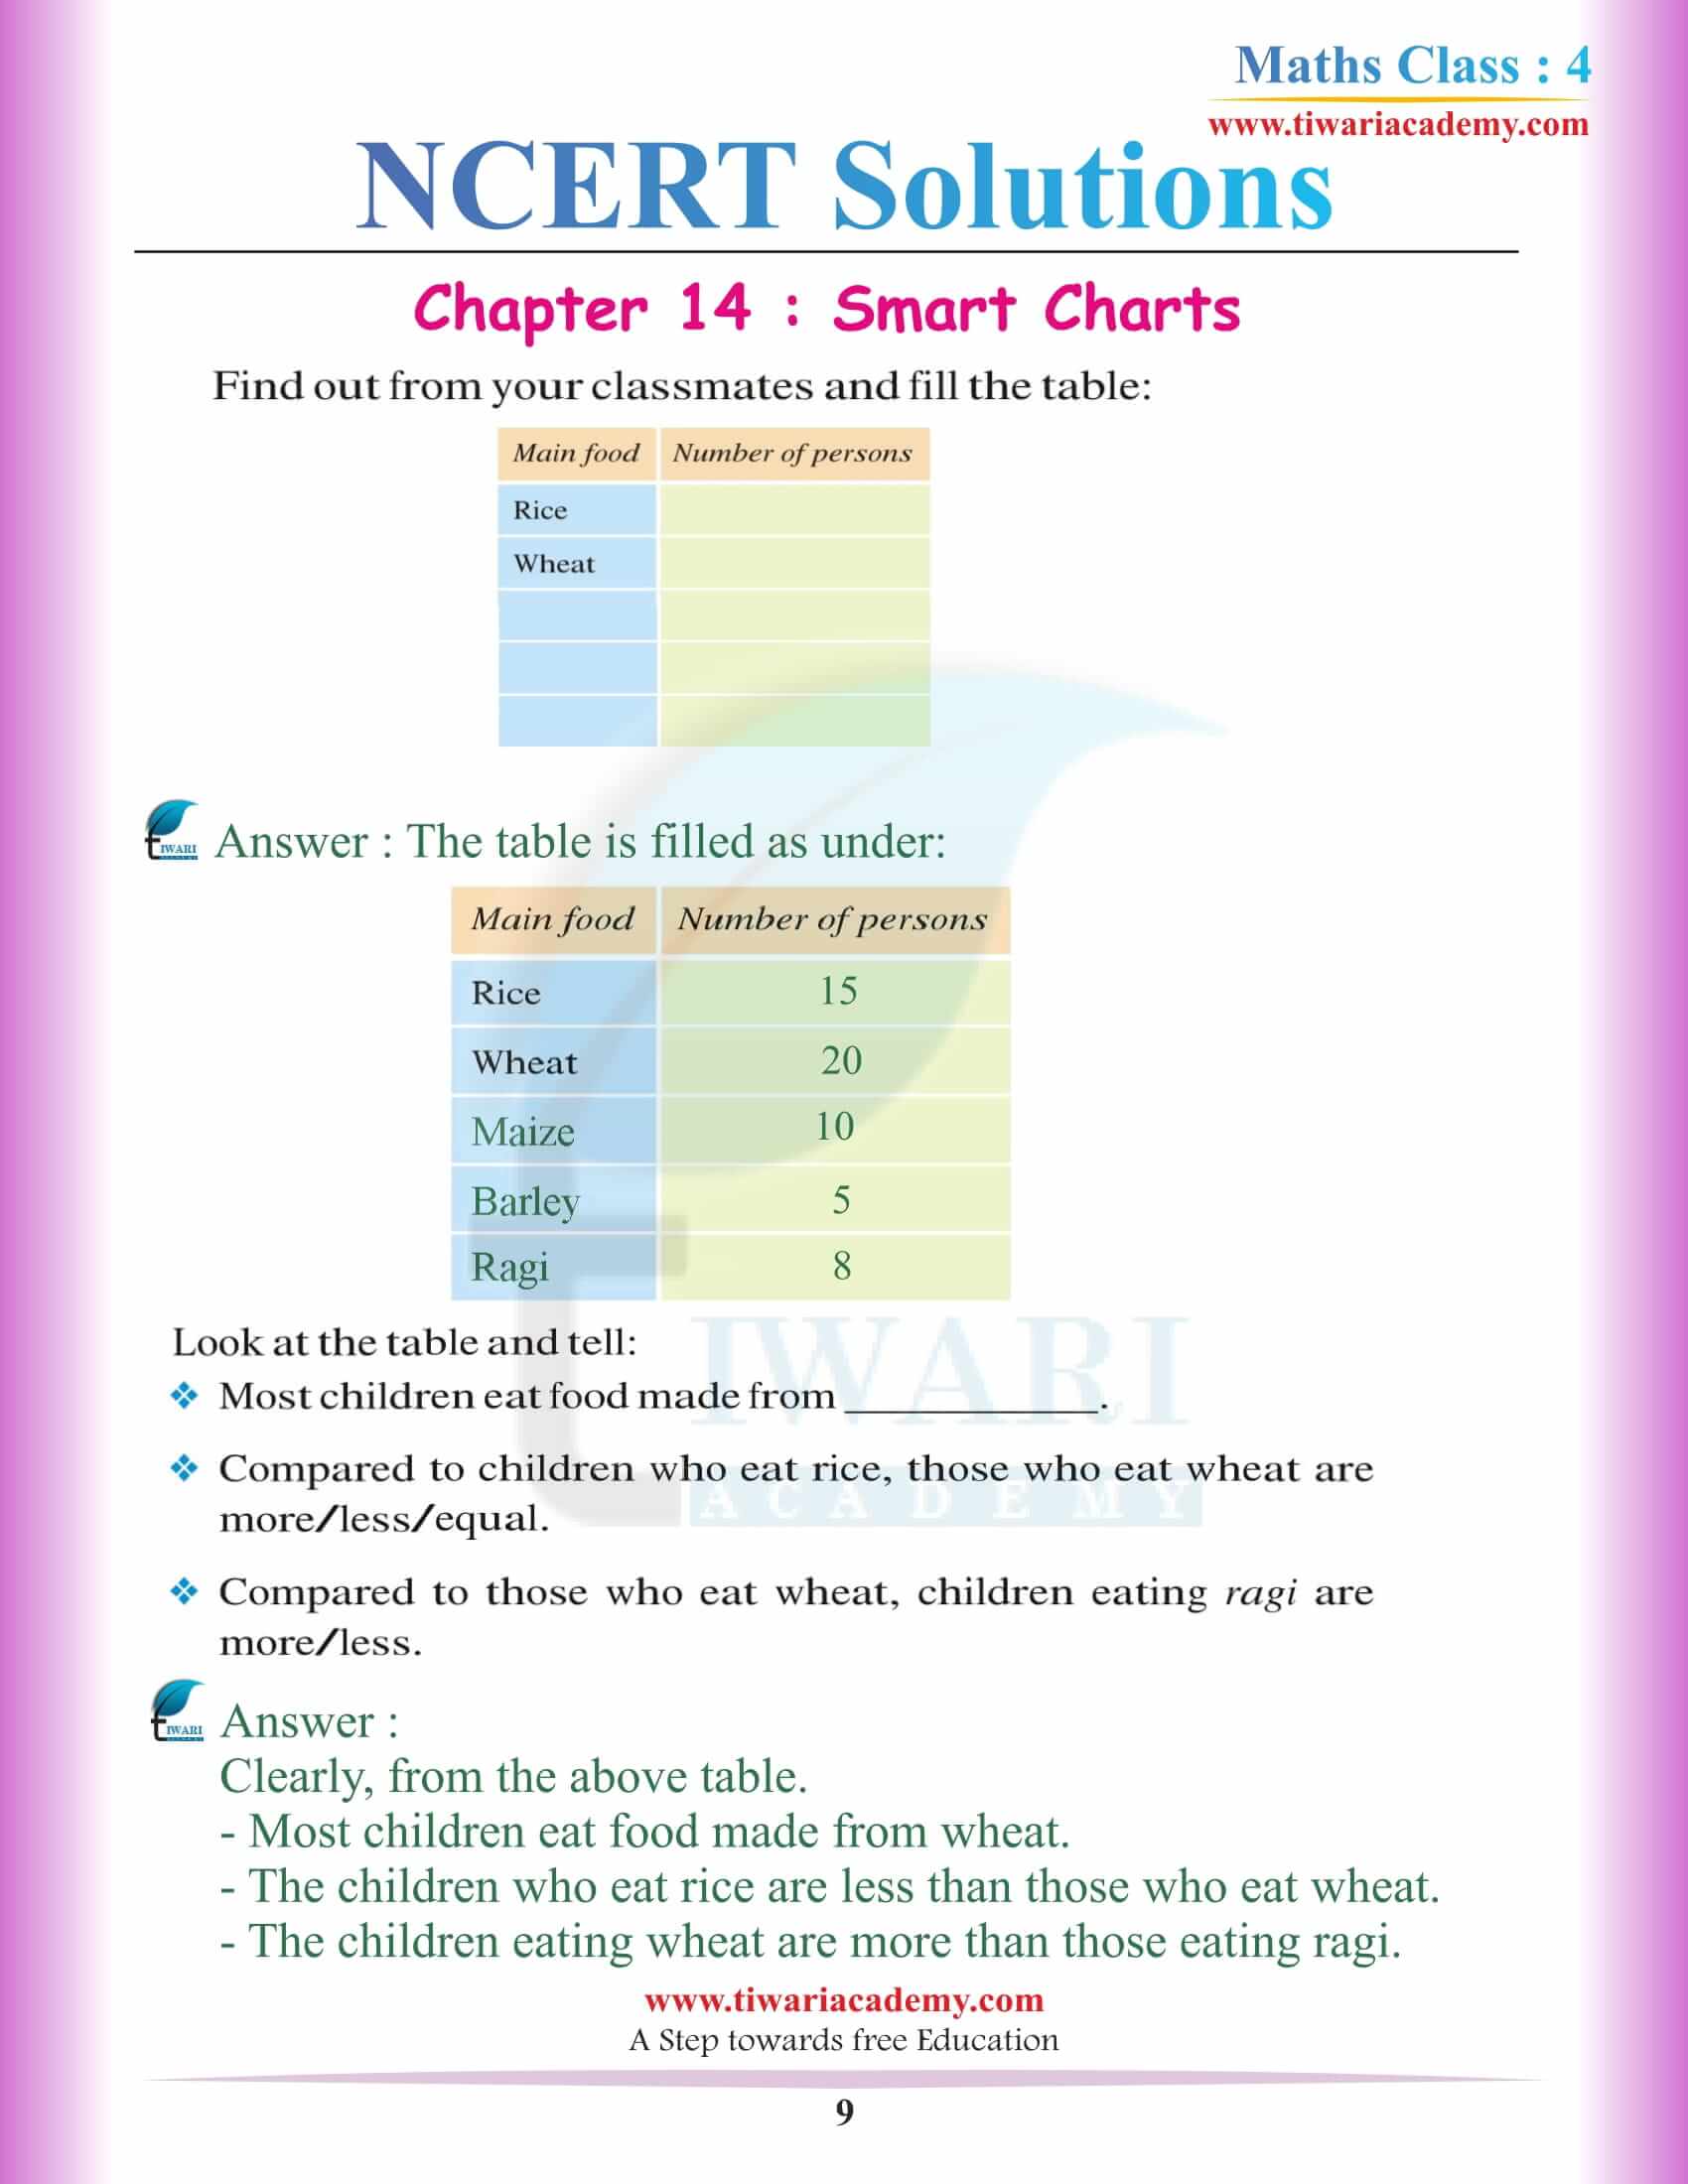 Class 4 Maths NCERT Chapter 14 Solutions in English medium